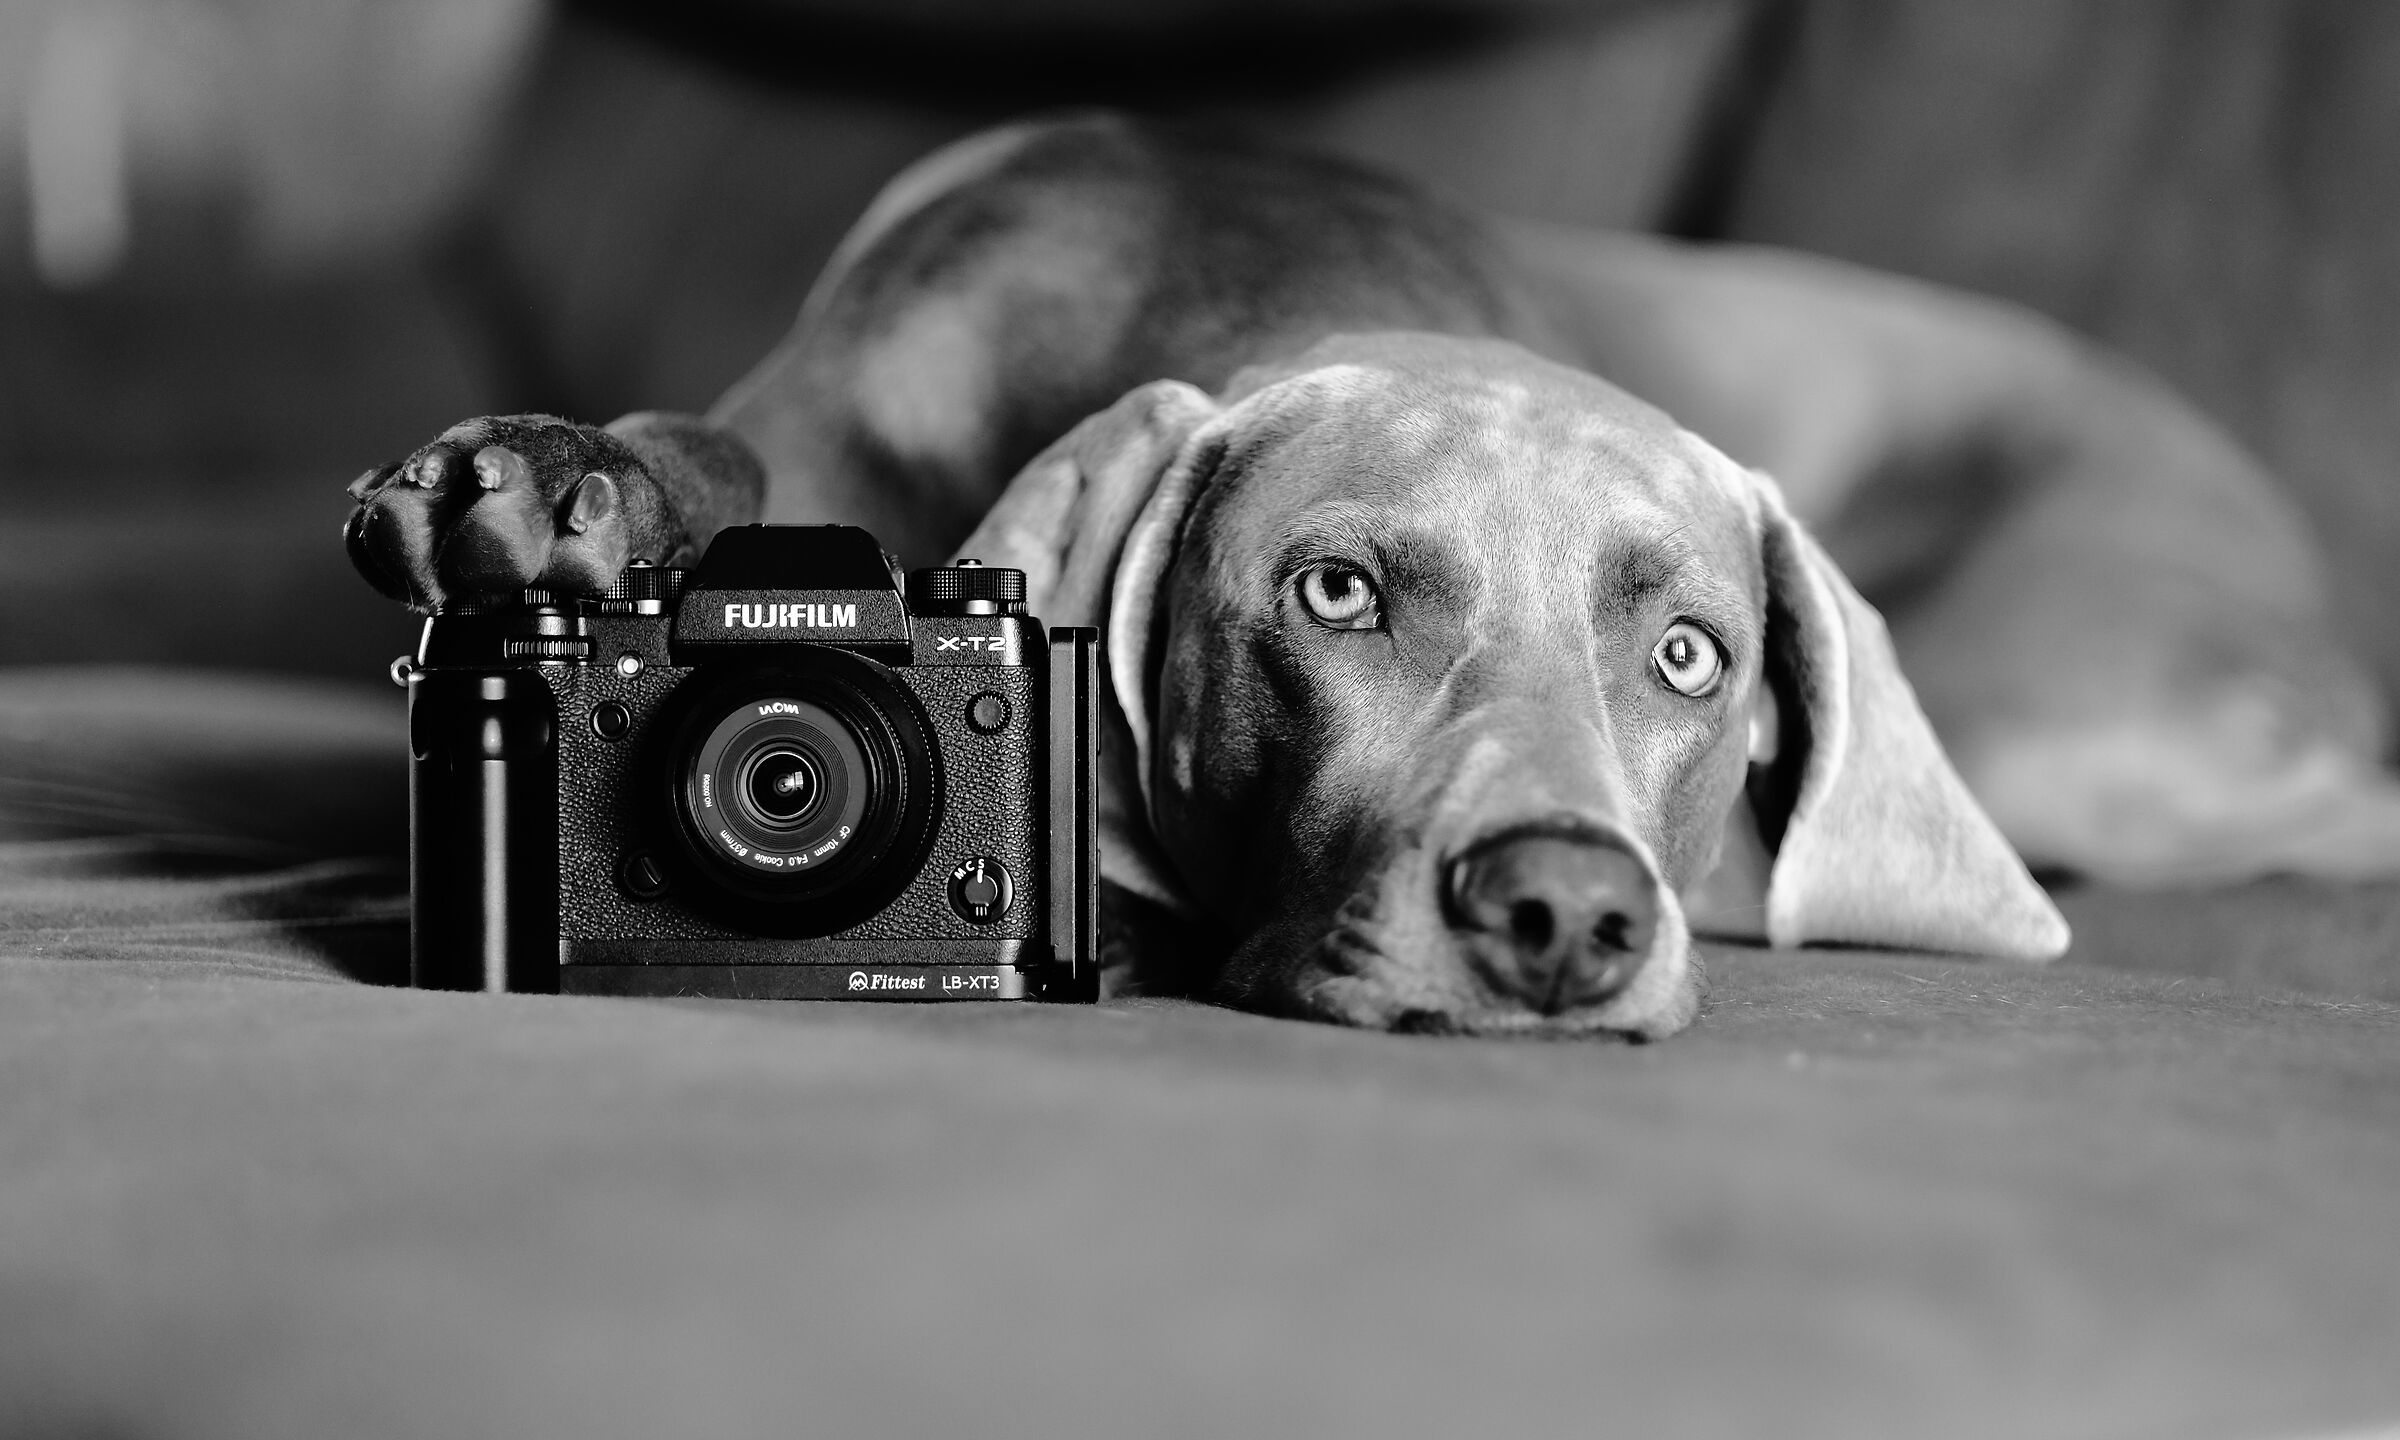 Grey Shadow and his Fujifilm...